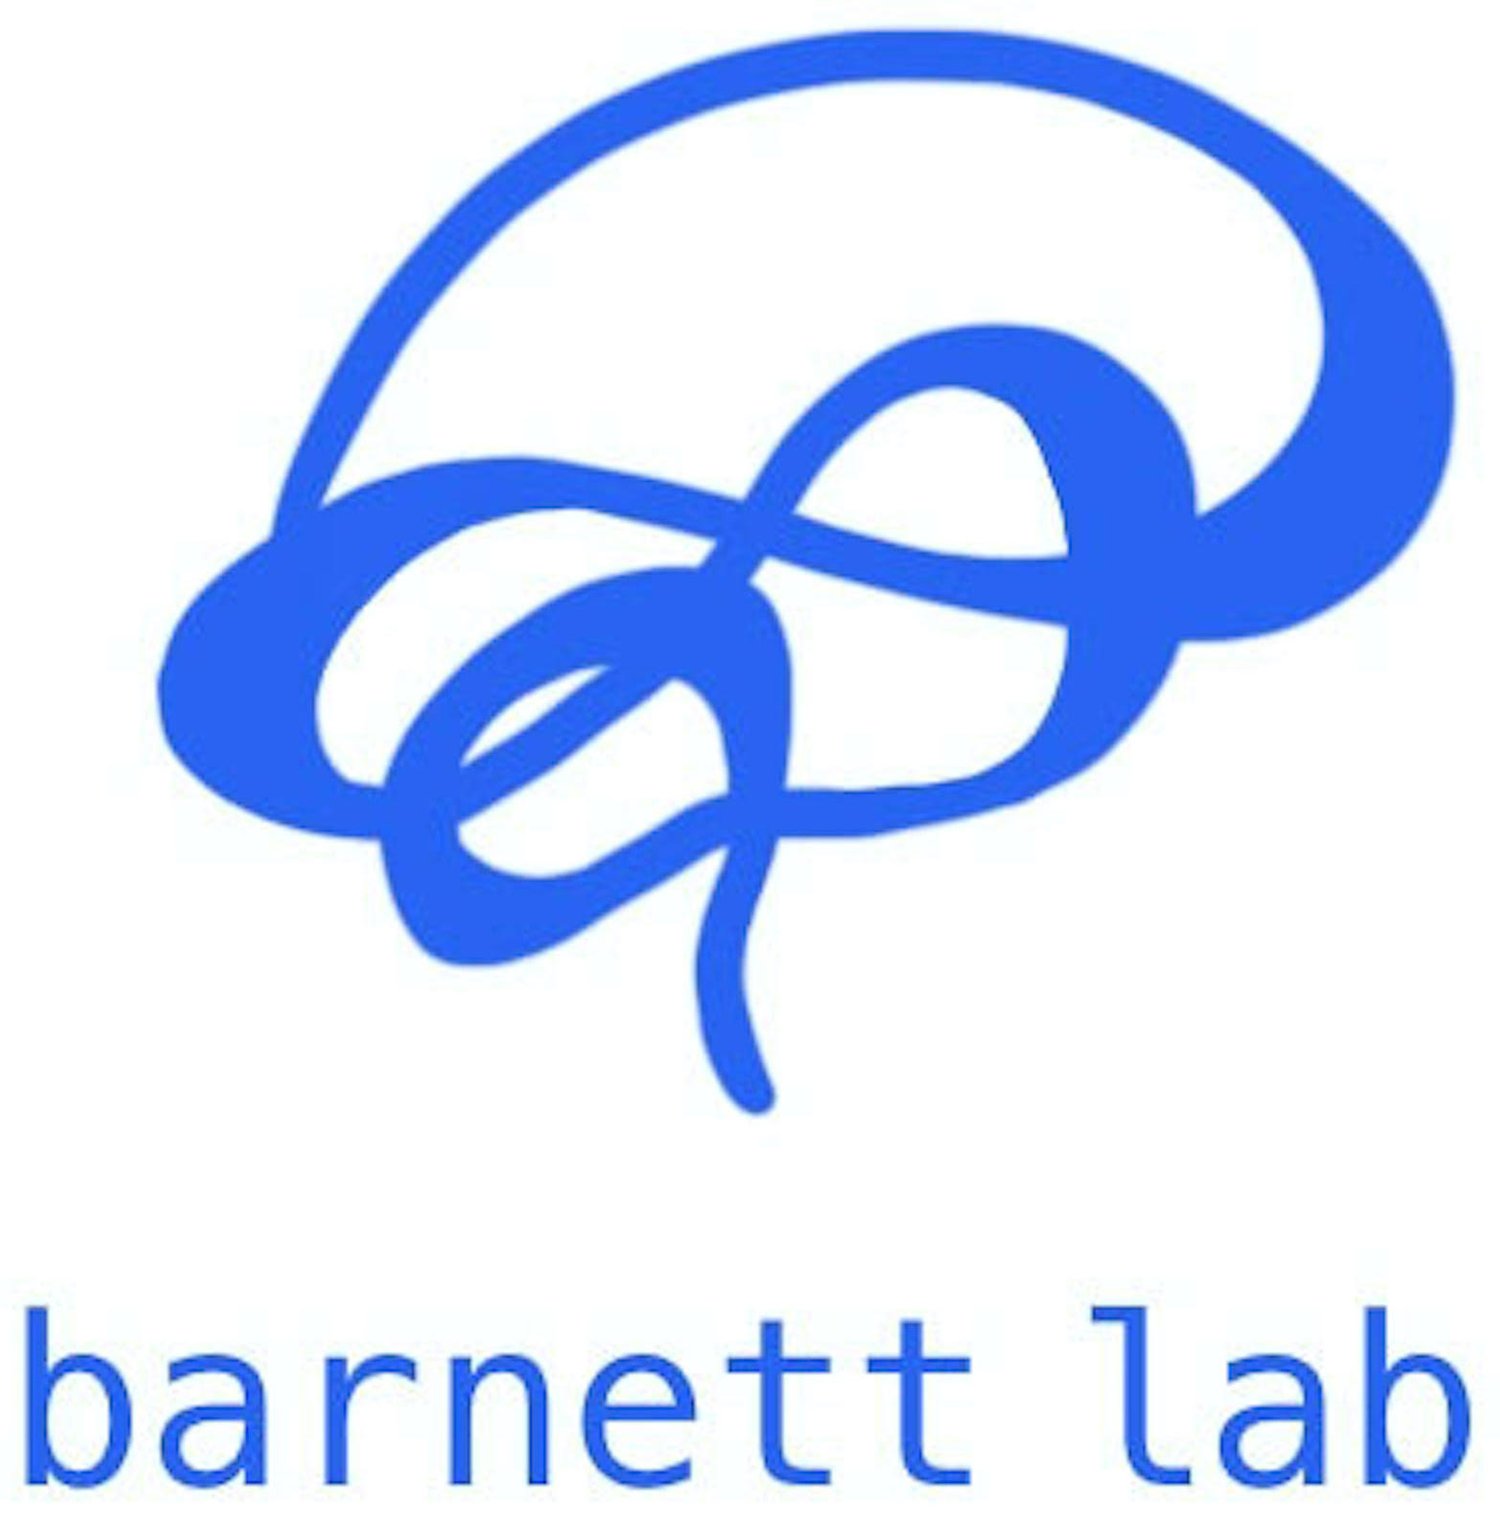 The Barnett Lab